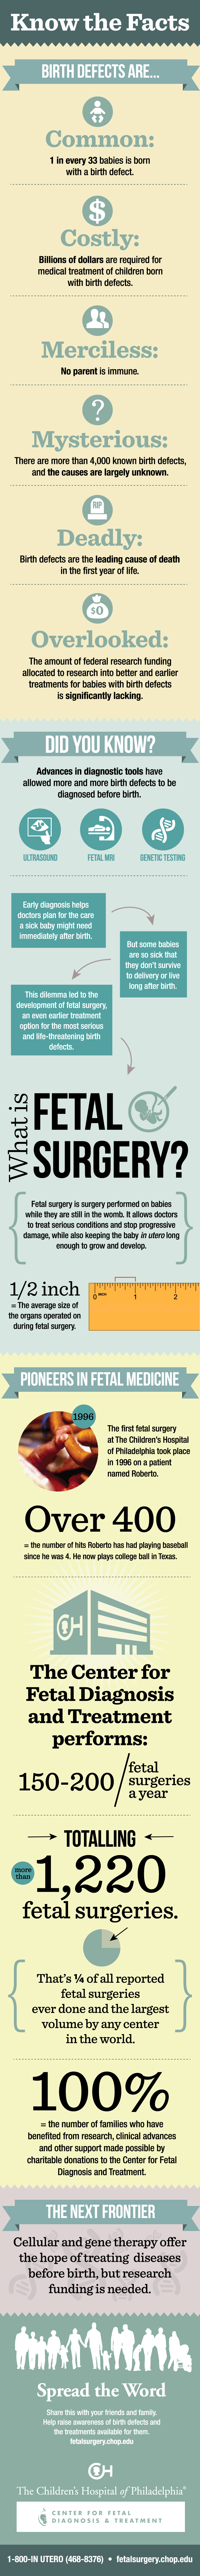 Fetal Surgery Infographic